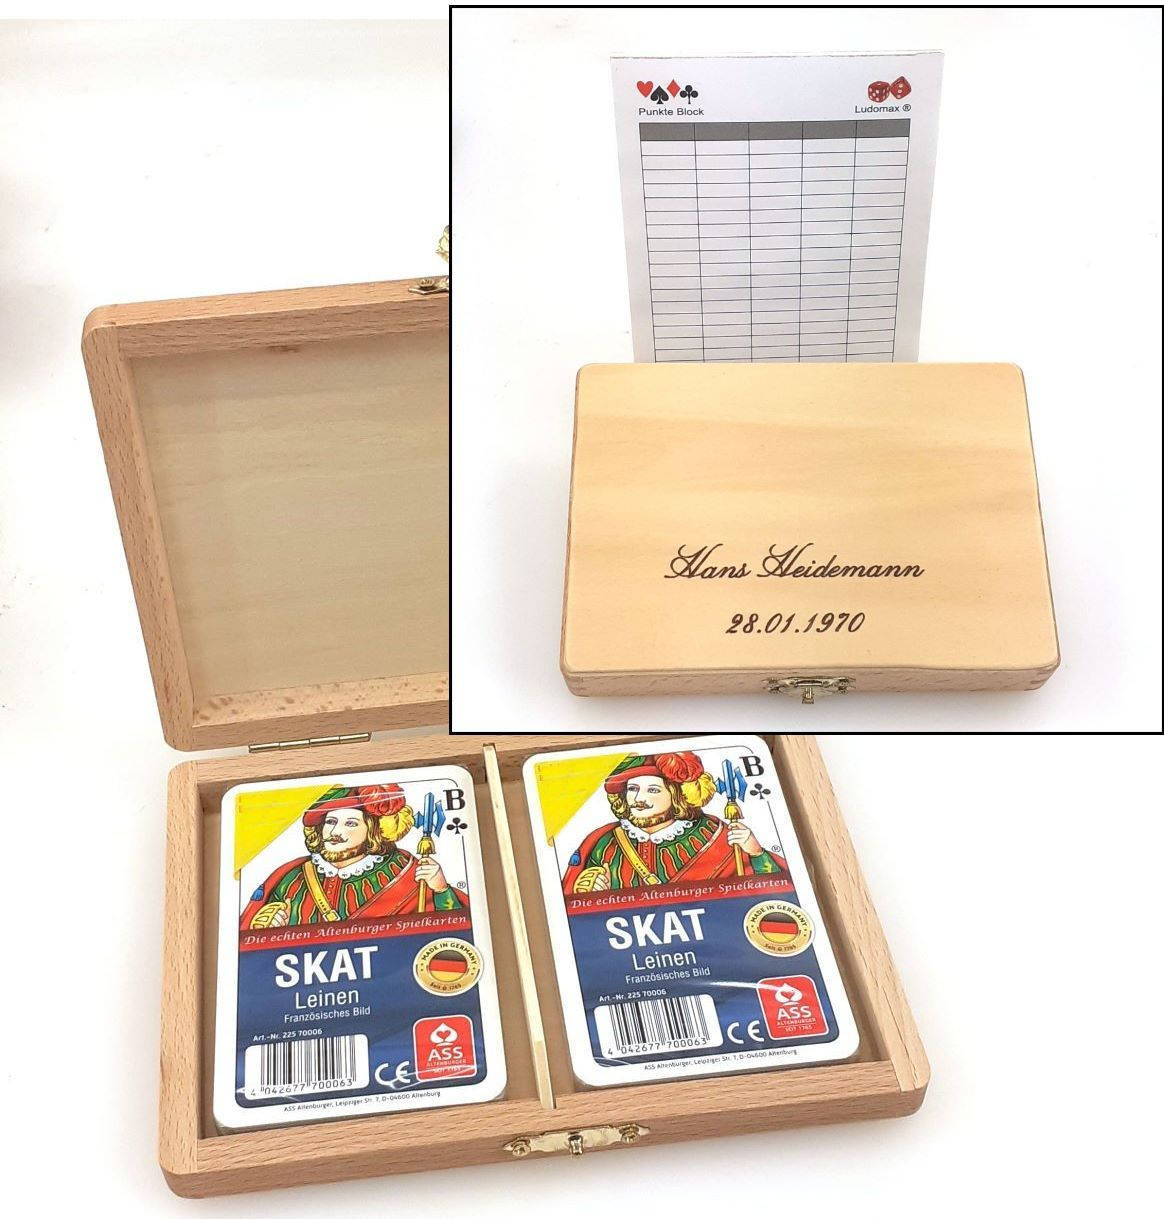 Personalized Skat Card Setin Wooden Box1970 Wallpaper